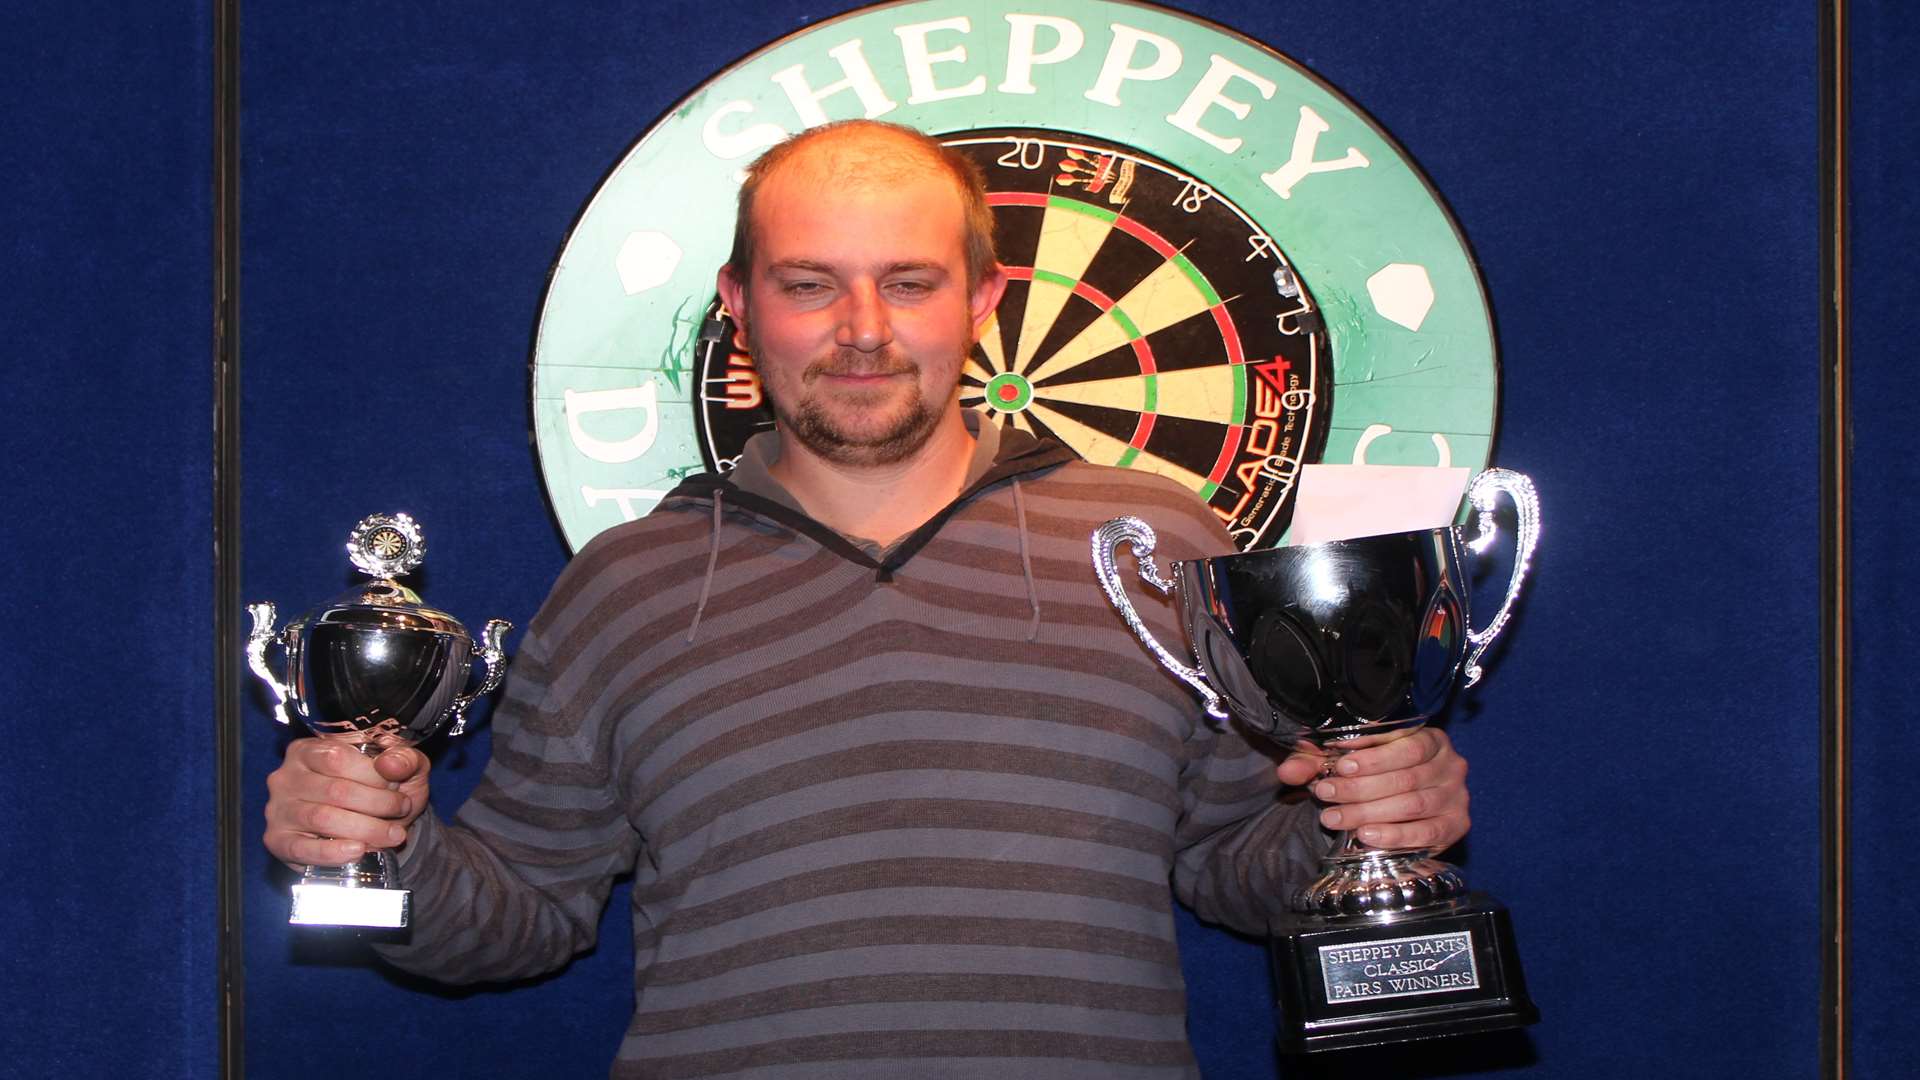 Scott Marsh won the 2013 Sheppey Darts Classic